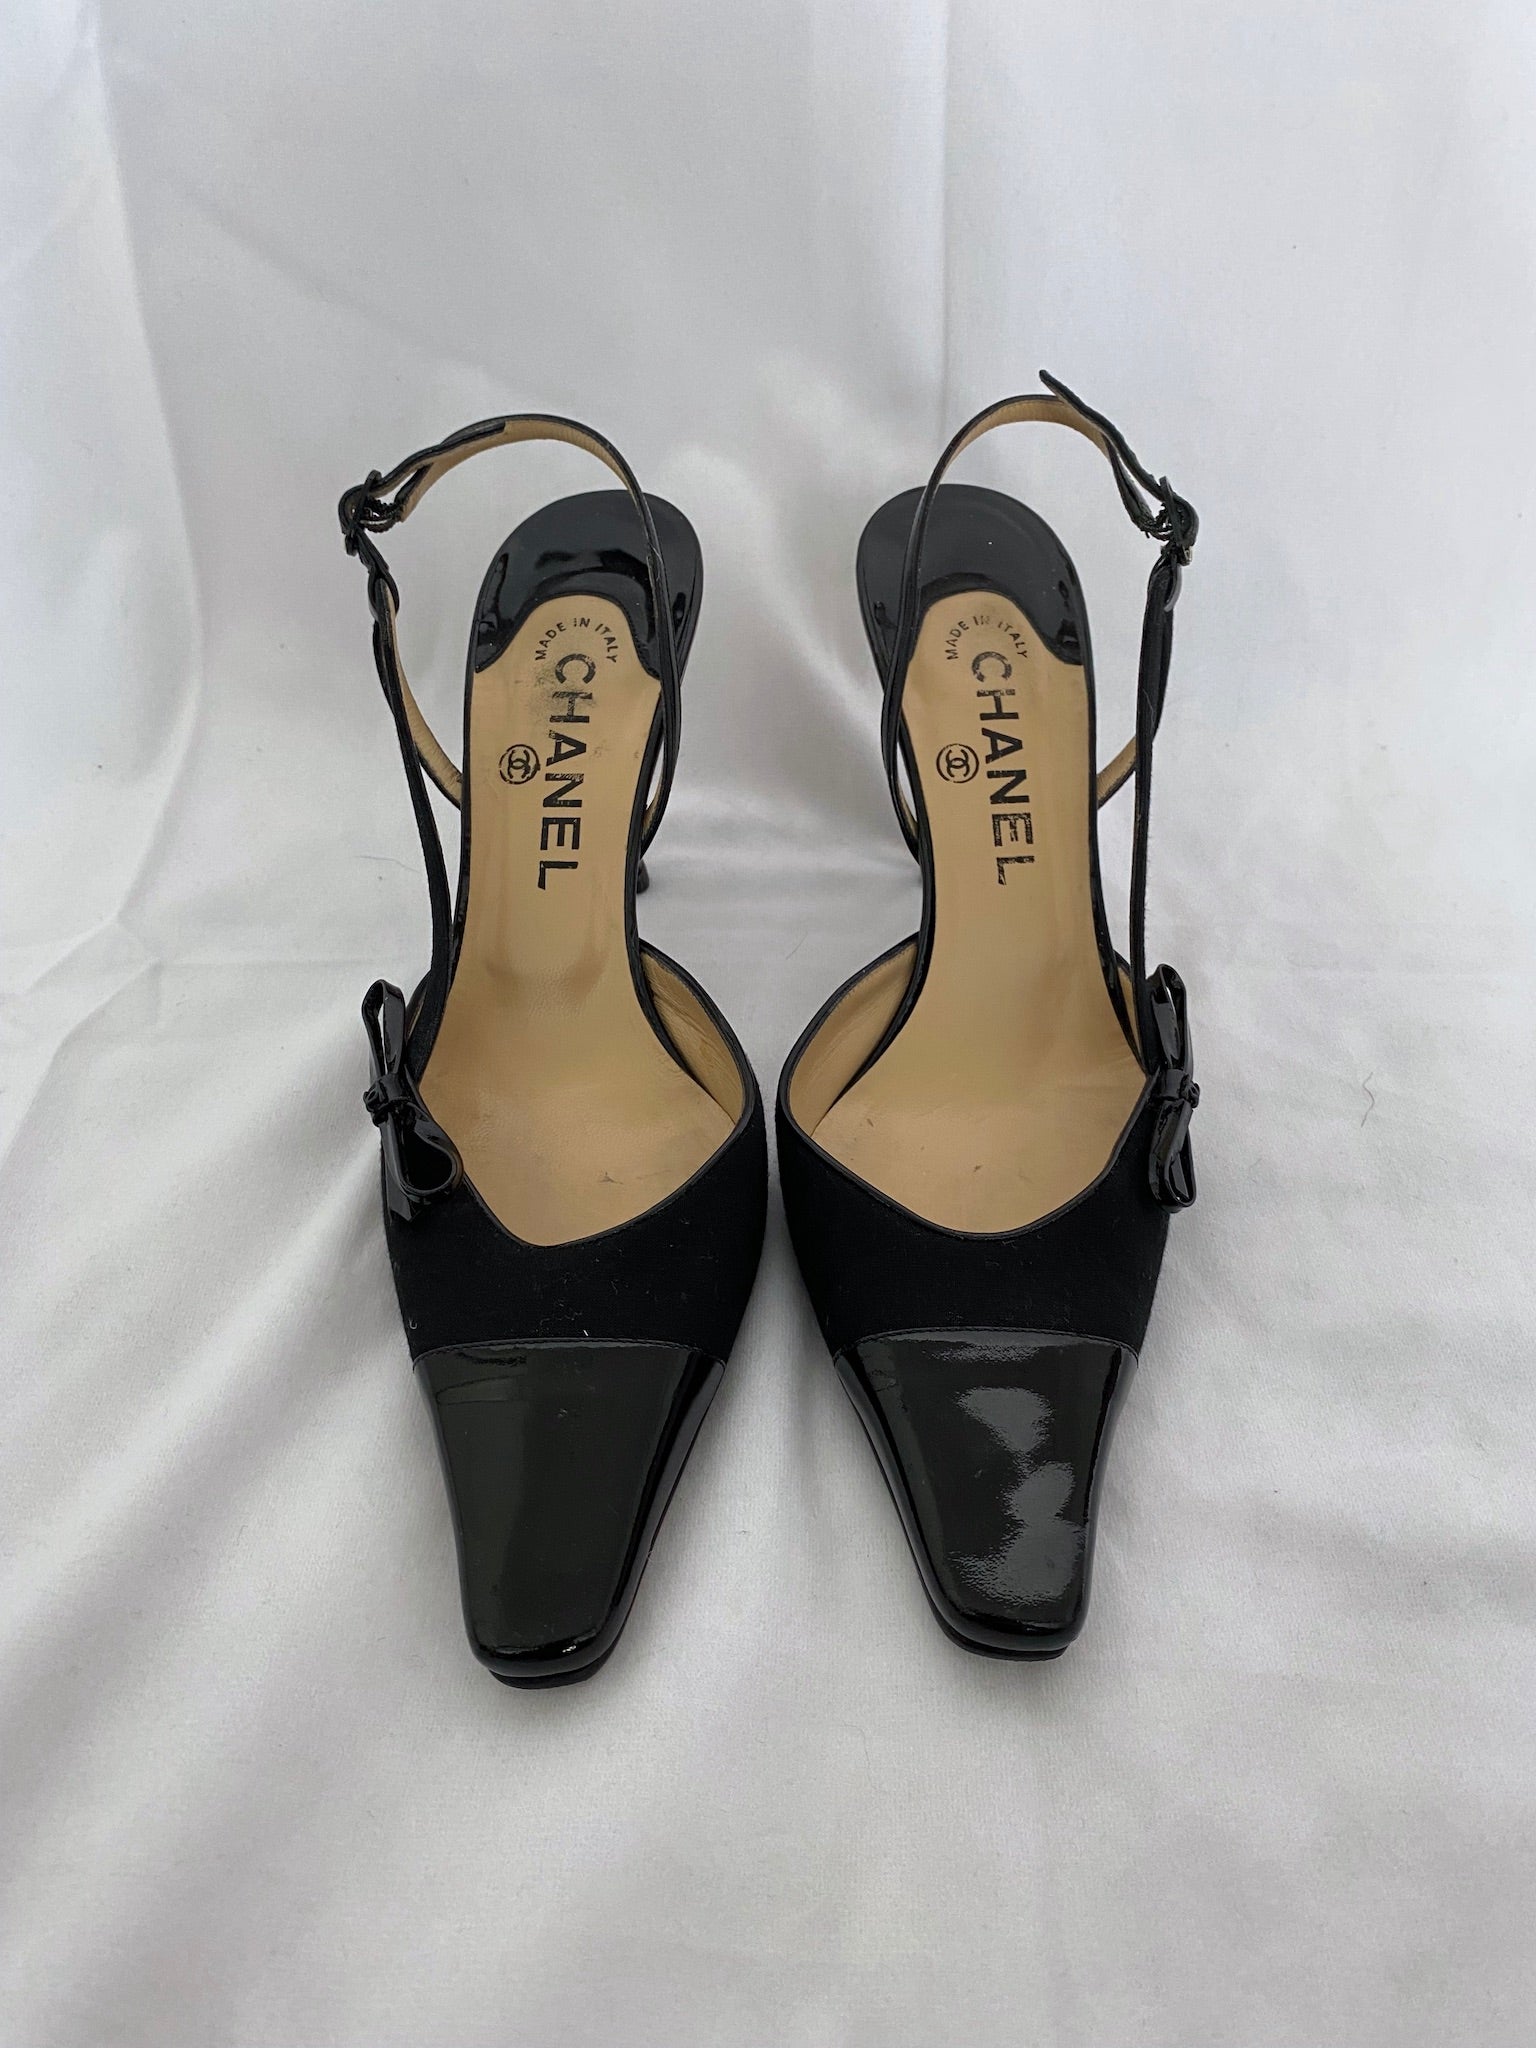 Vintage Chanel Leather Slingback Shoes Size 6